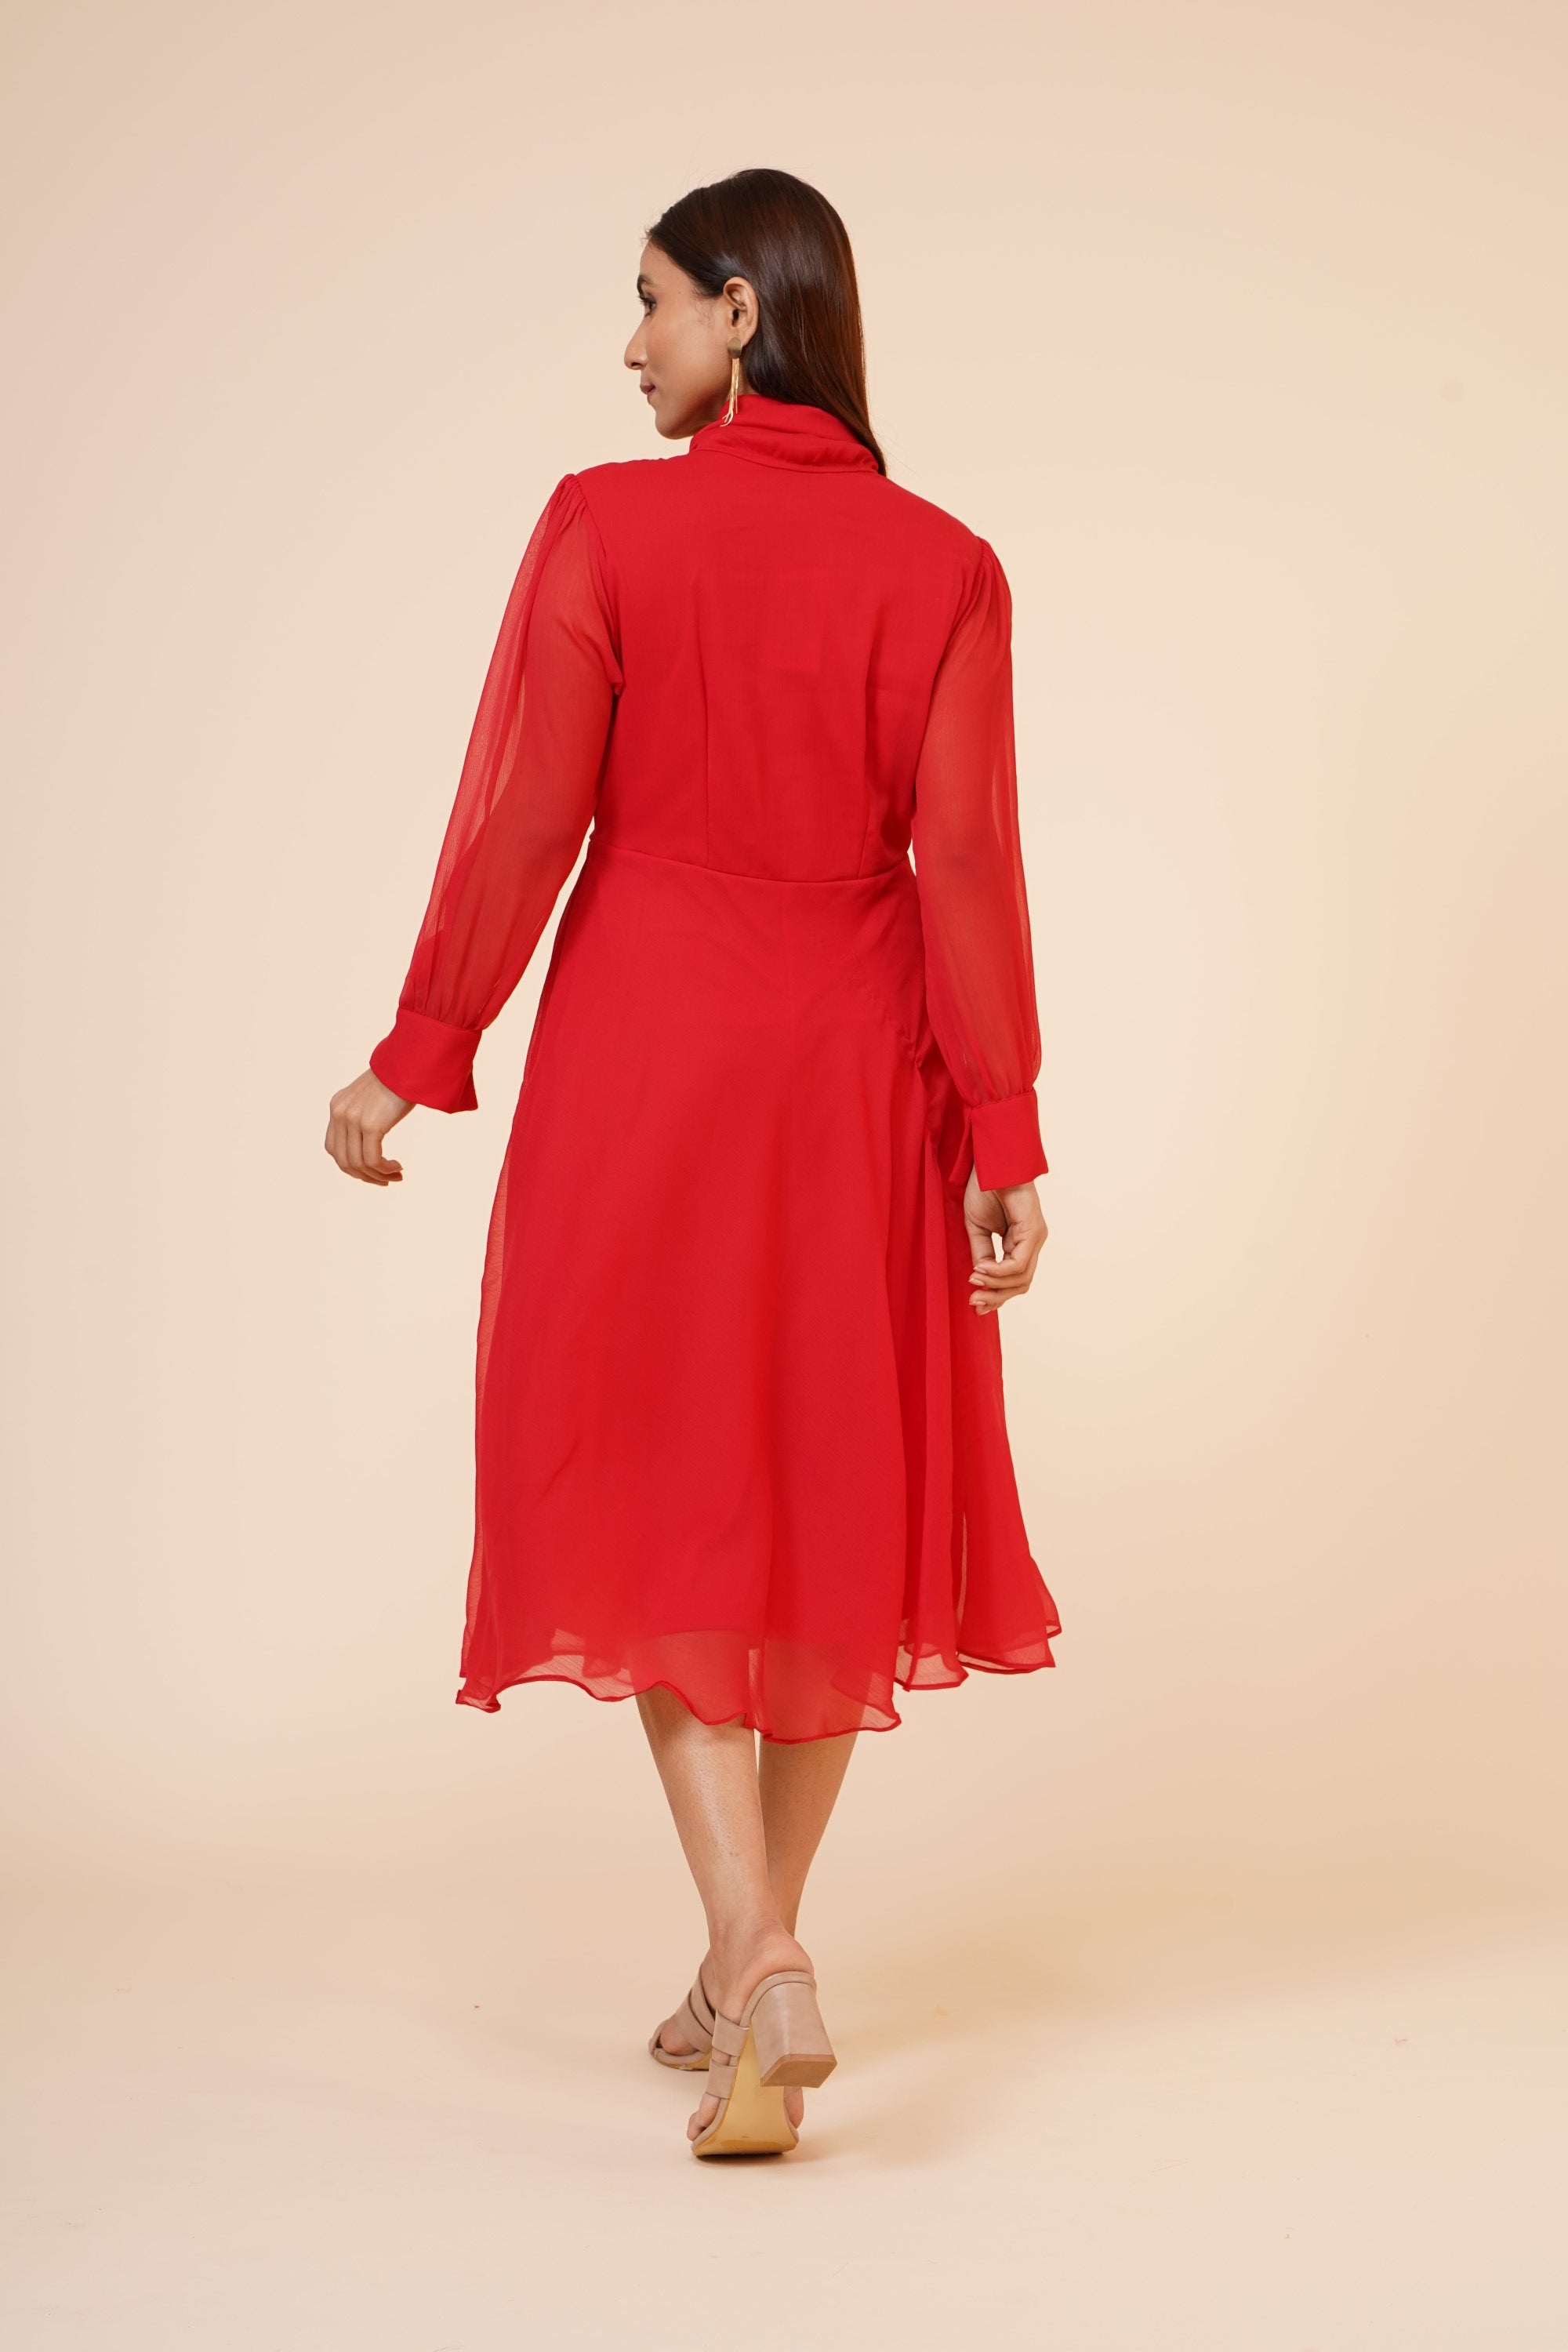 Women's Red Chiiffon Casual Midi Dress - MIRACOLOS by Ruchi